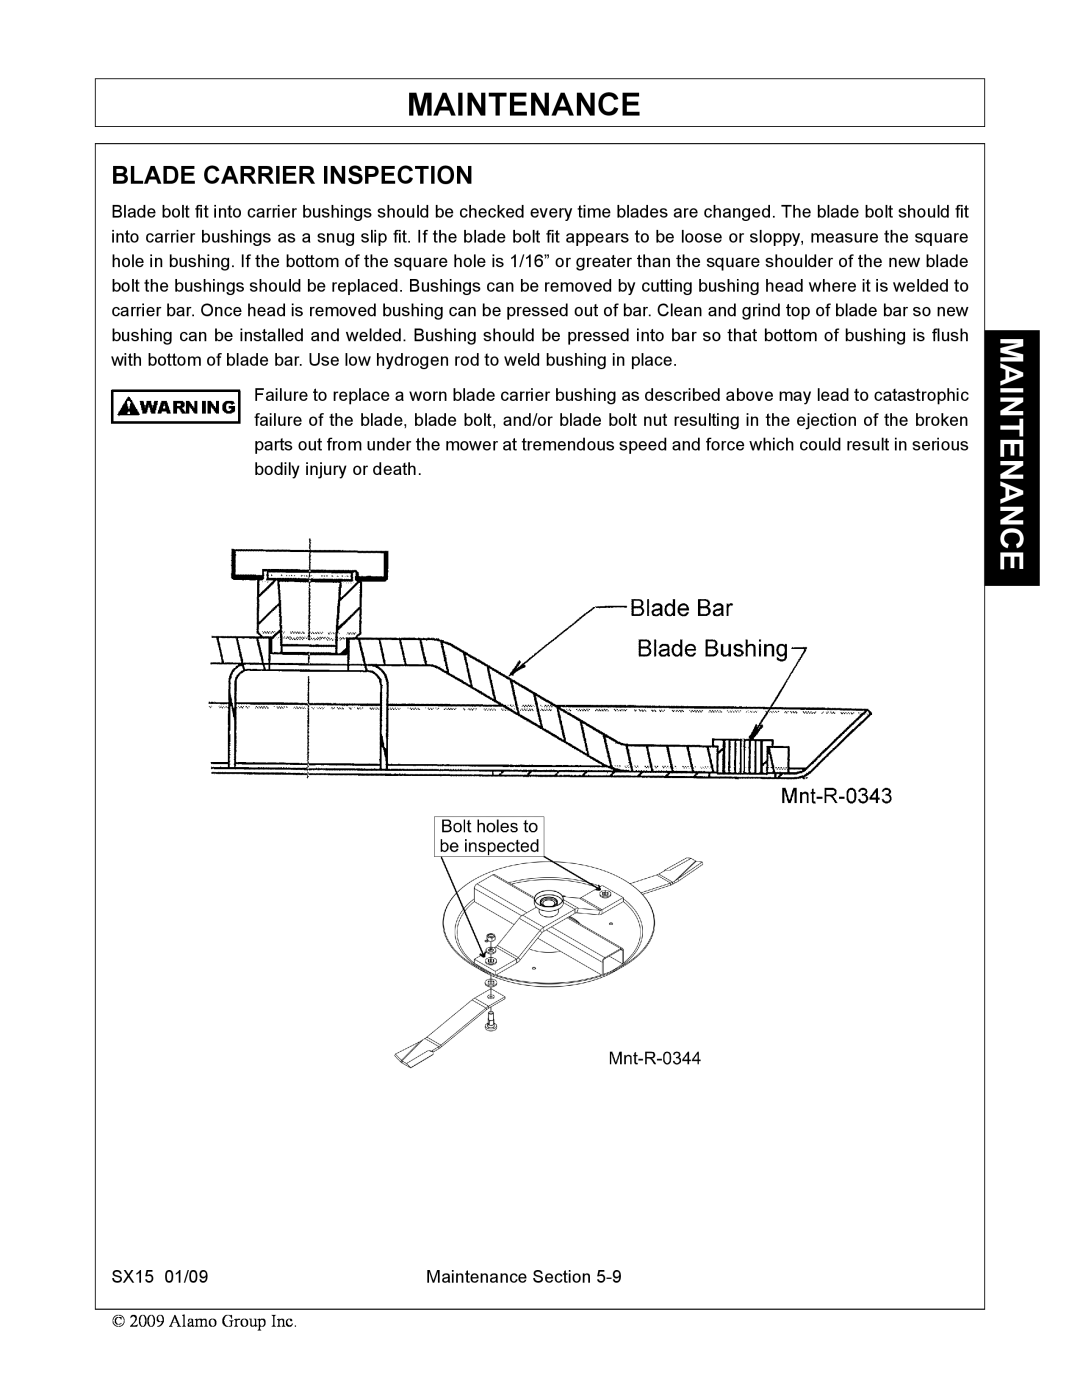 Alamo SX15 manual Blade Carrier Inspection, Maintenance 